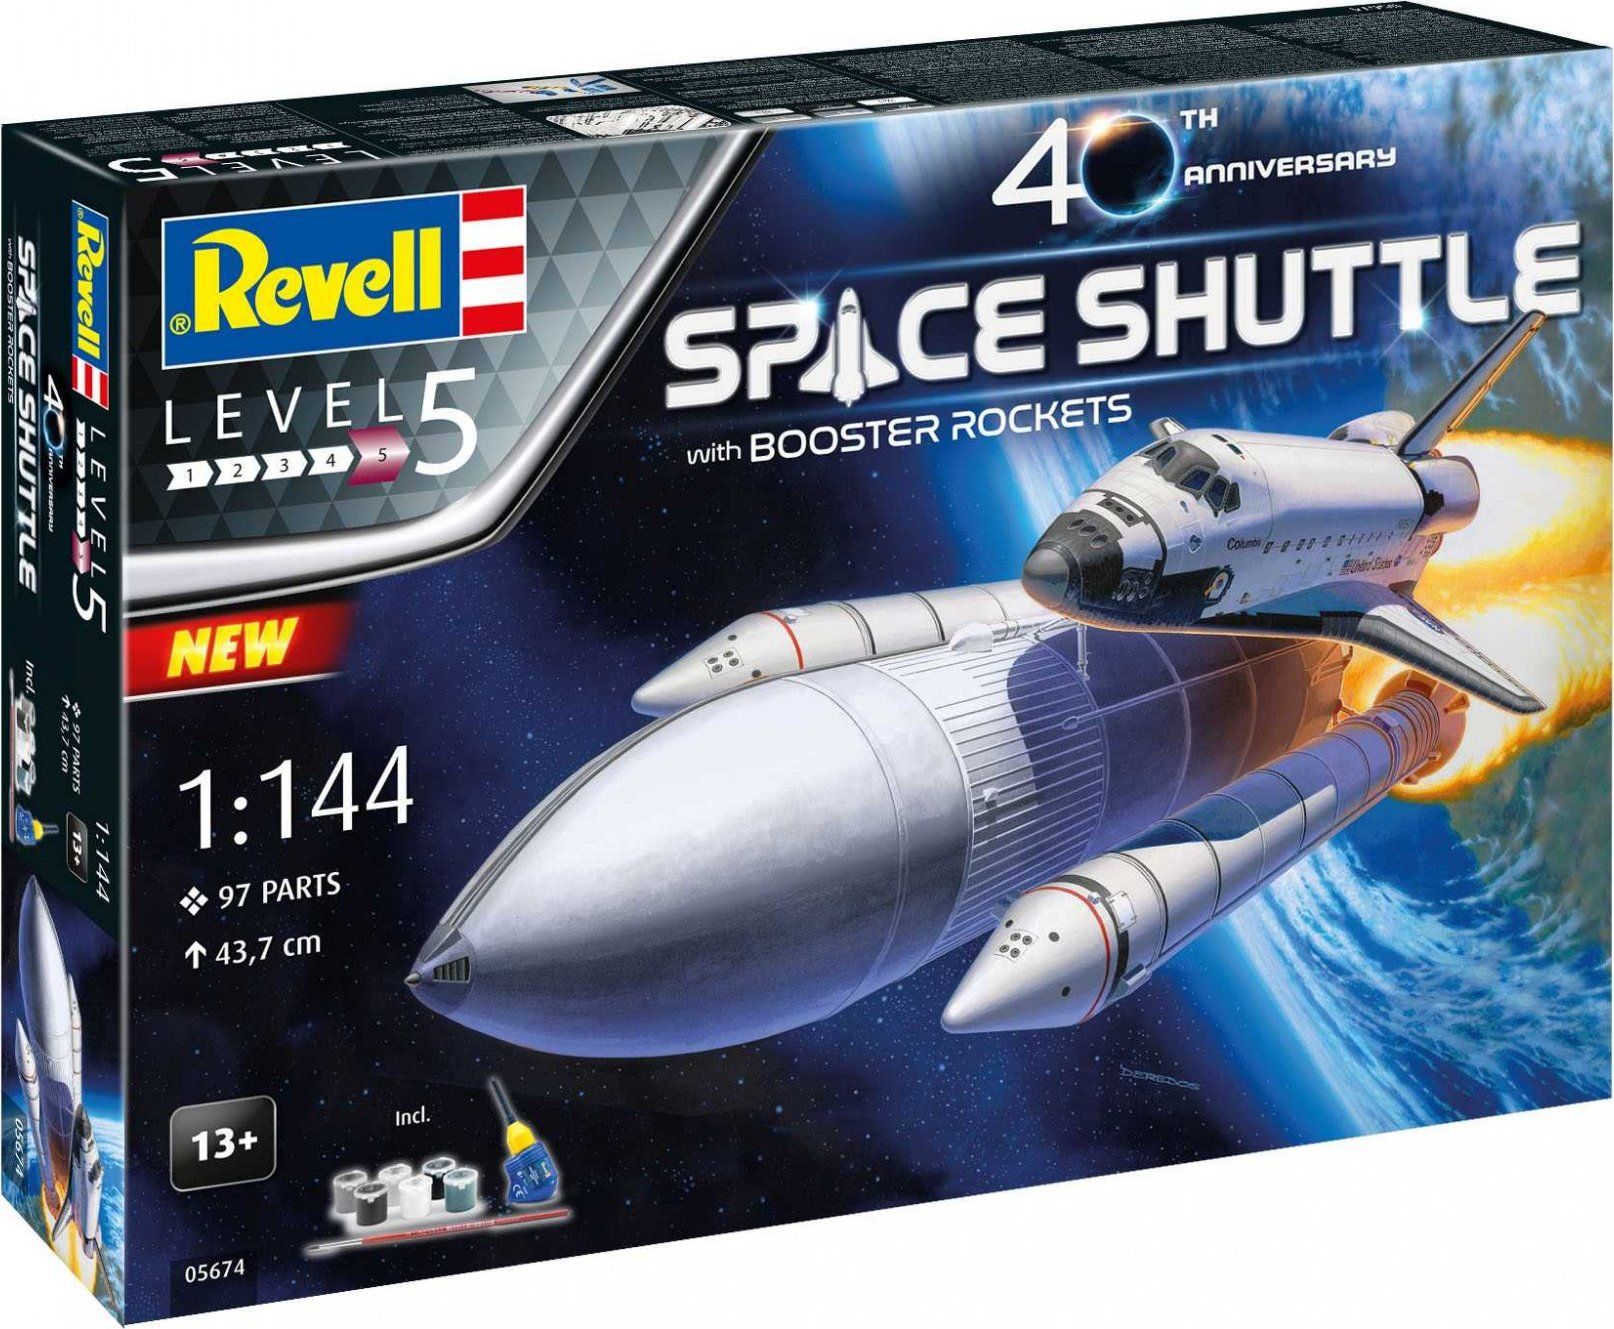 REVELL Gift-Set vesmír 05674 - Space Shuttle & Booster Rockets - 40th Anniversary (1:144) - obrázek 1